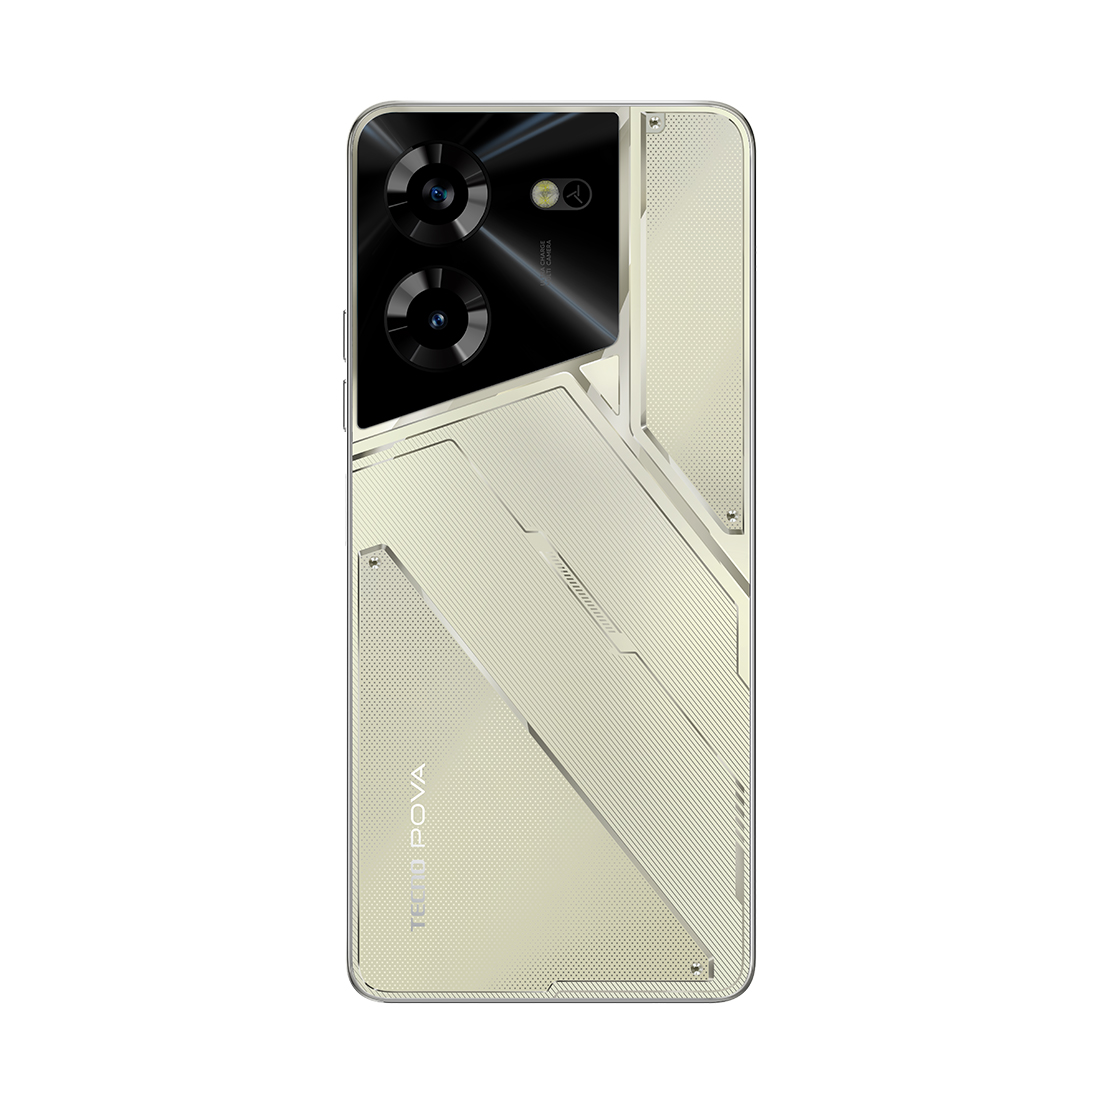 Мобильный телефон TECNO POVA 5 (LH7n) 256+8 GB Amber Gold